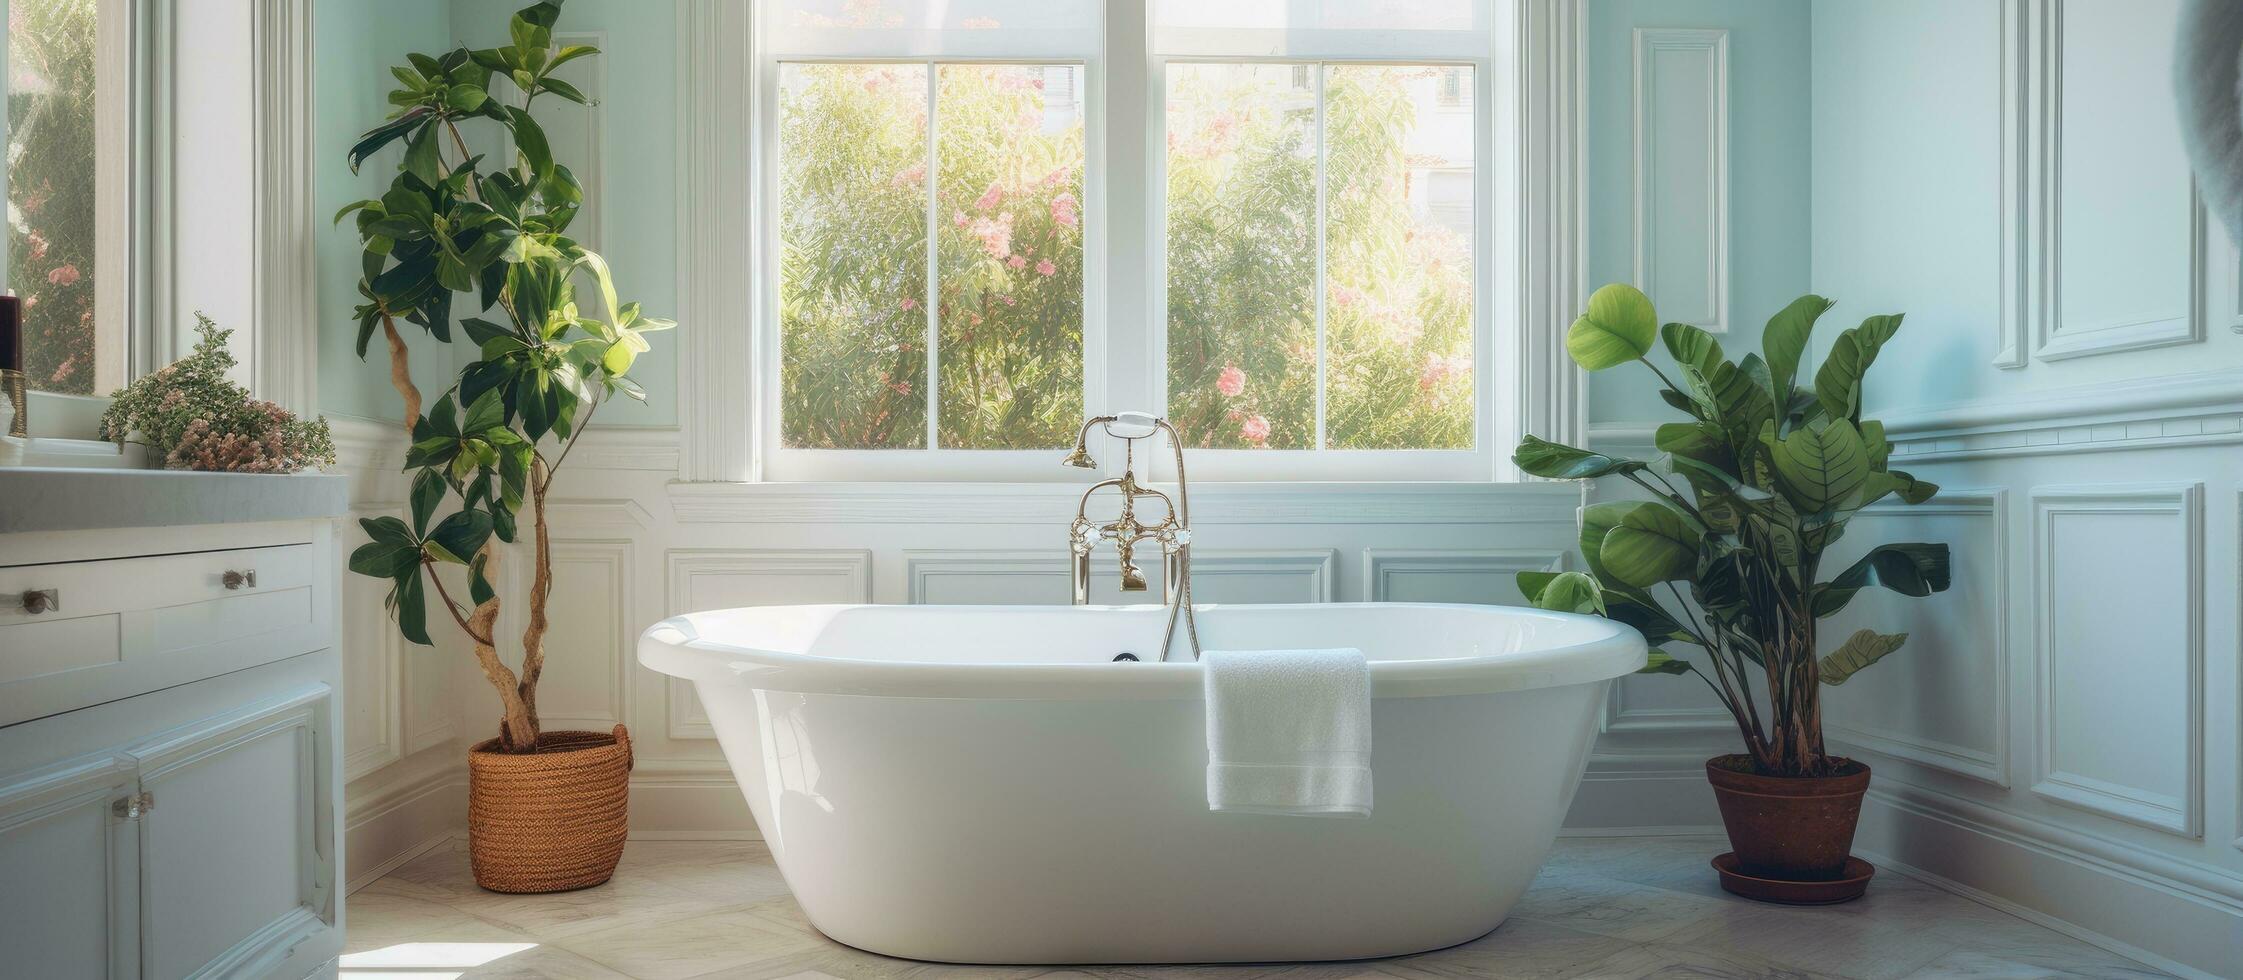 Stylish bathroom features luxurious bathtub photo